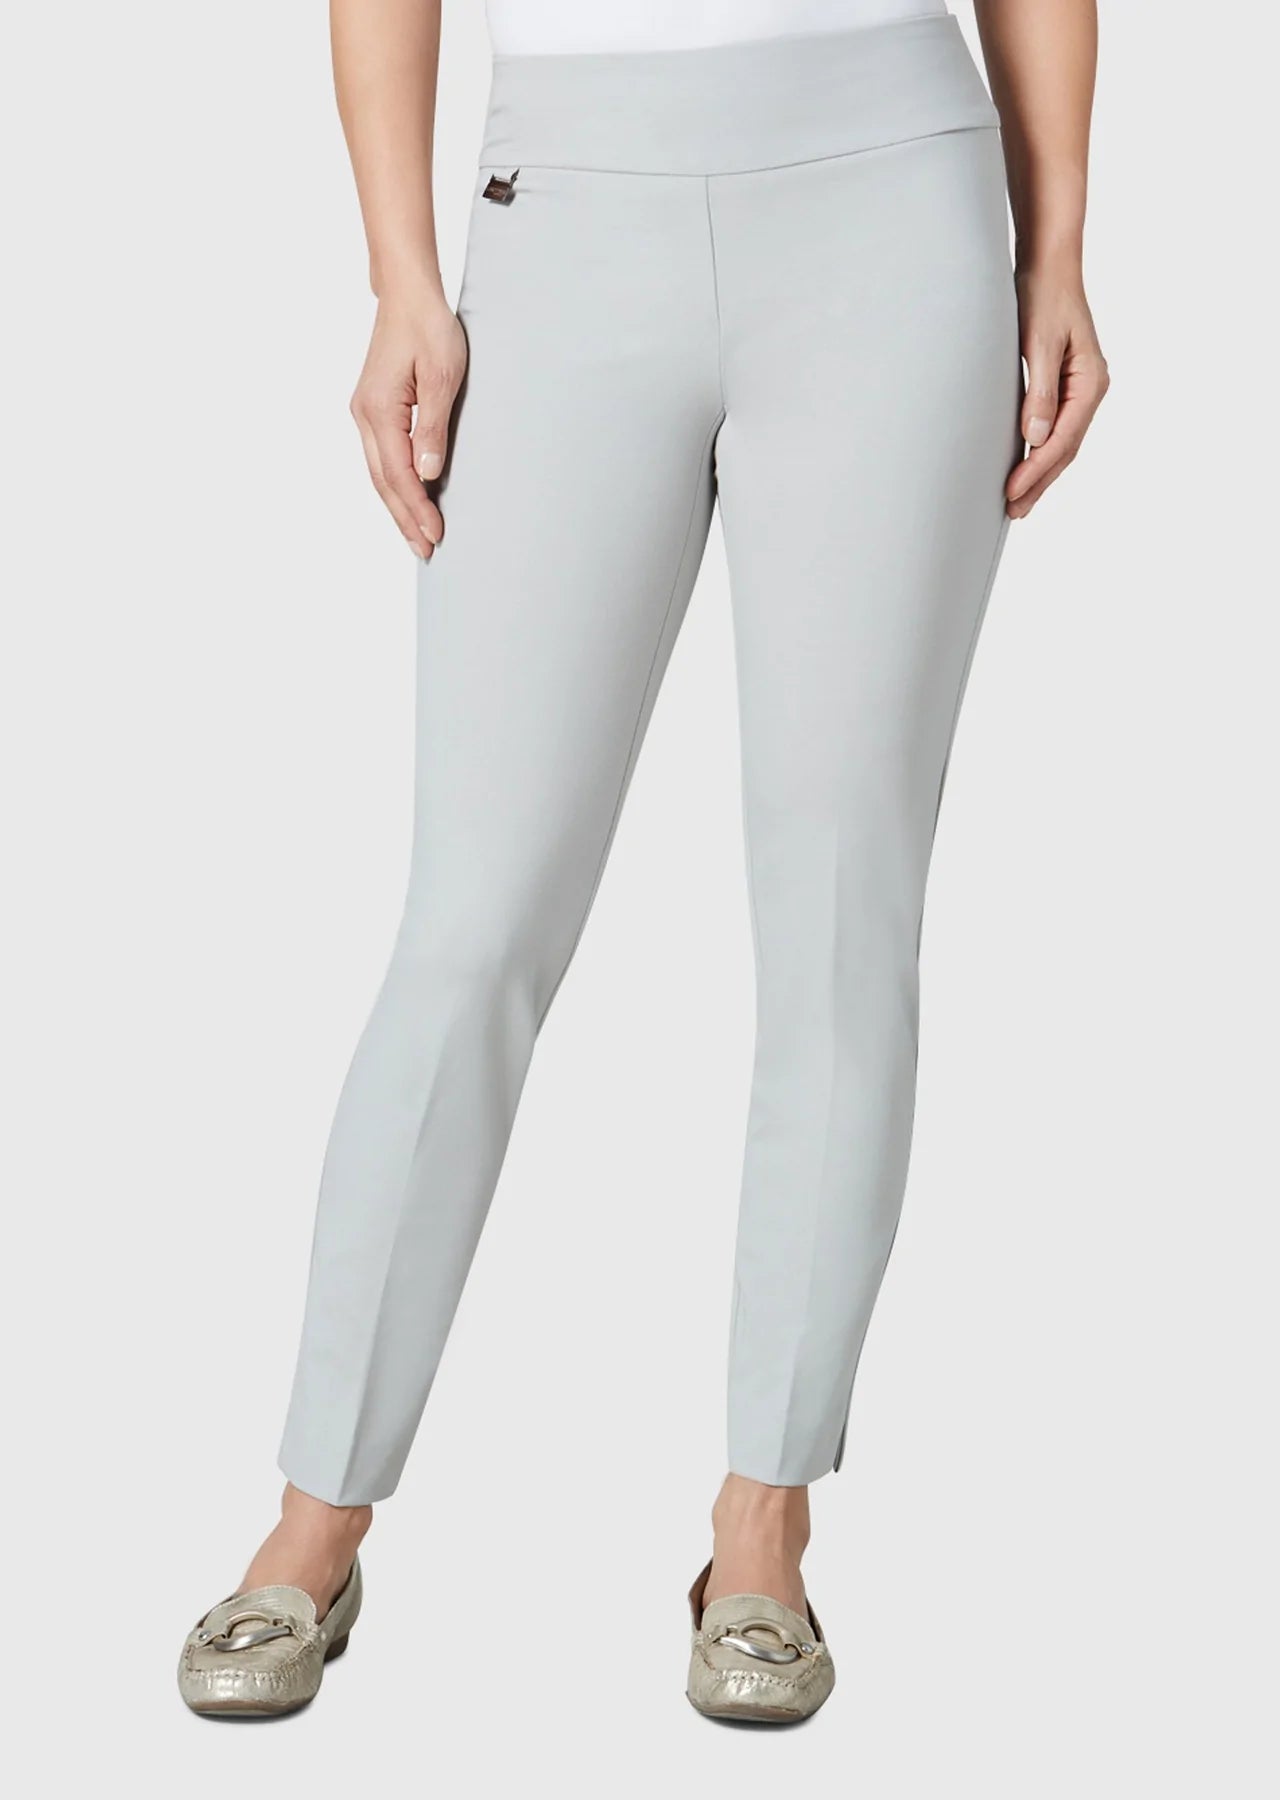 Lisette L Essentials, Slim Ankle Narrow Pants, Kathryn PDR, Style 17655 –  Dream Pants